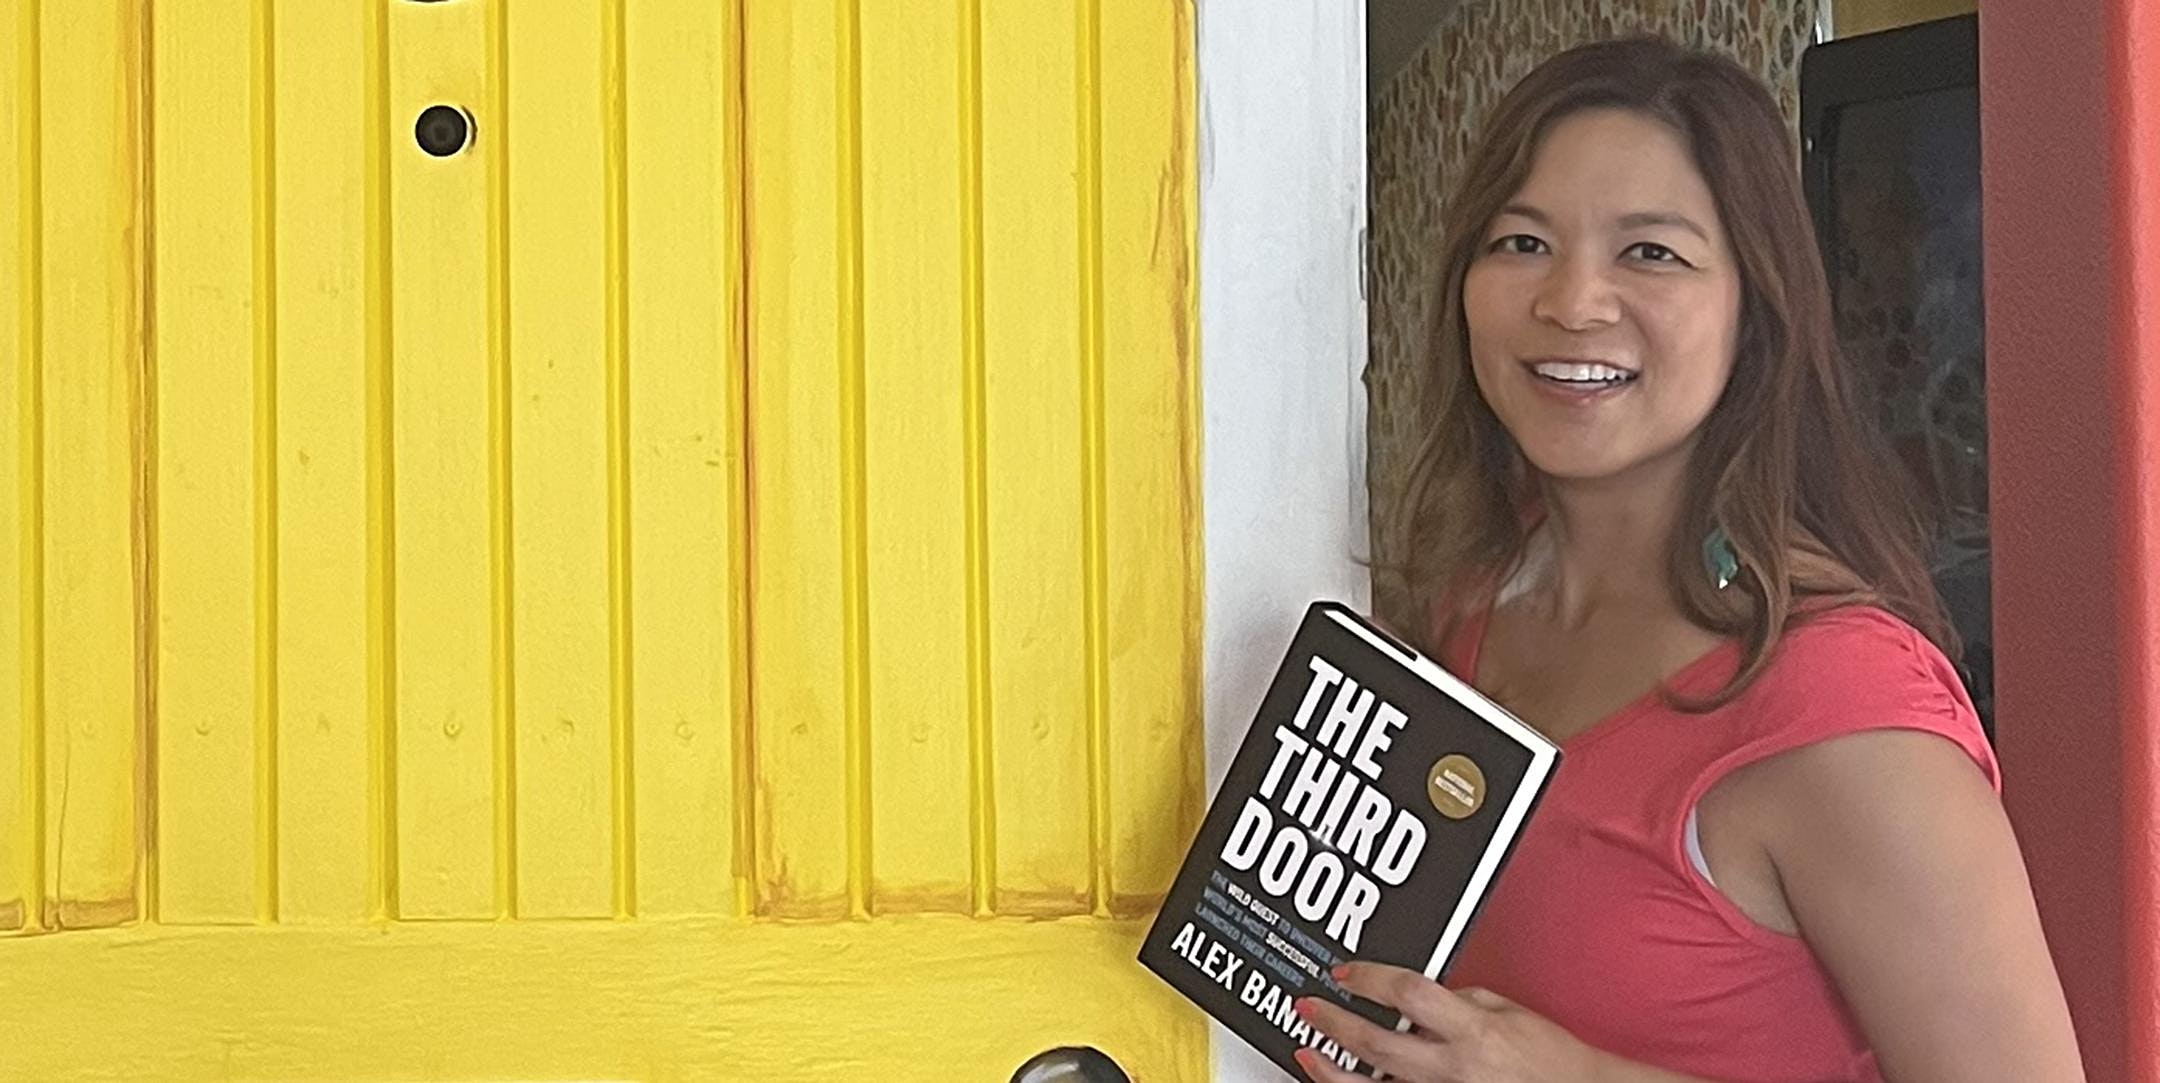 What's Next? Book Club: The Third Door